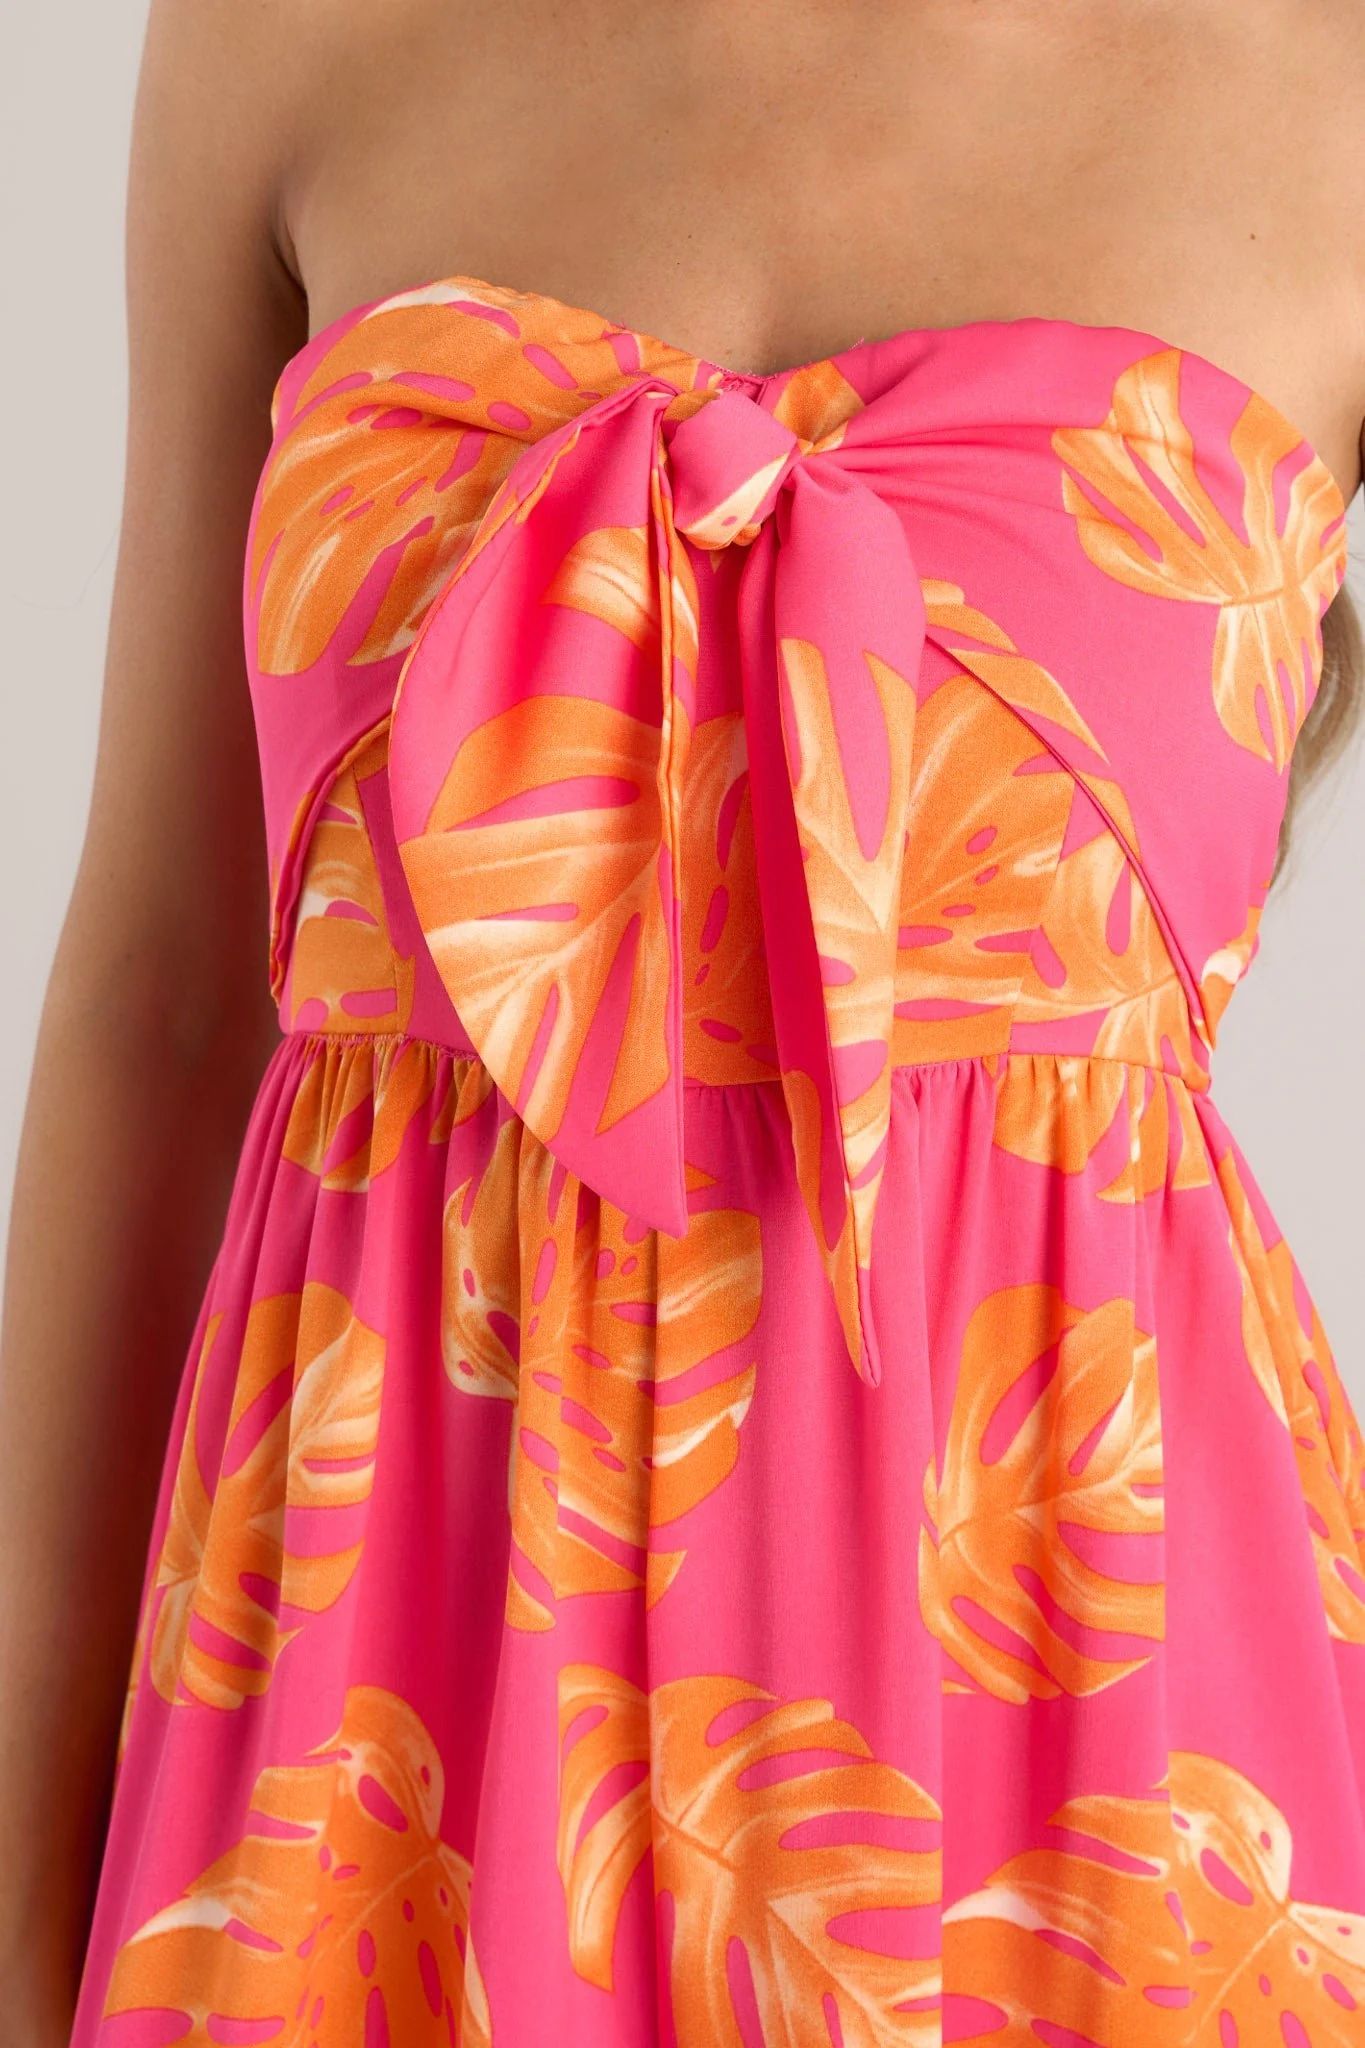 Beach Bliss Hot Pink & Orange Tropical Print Strapless Jumpsuit | Red Dress